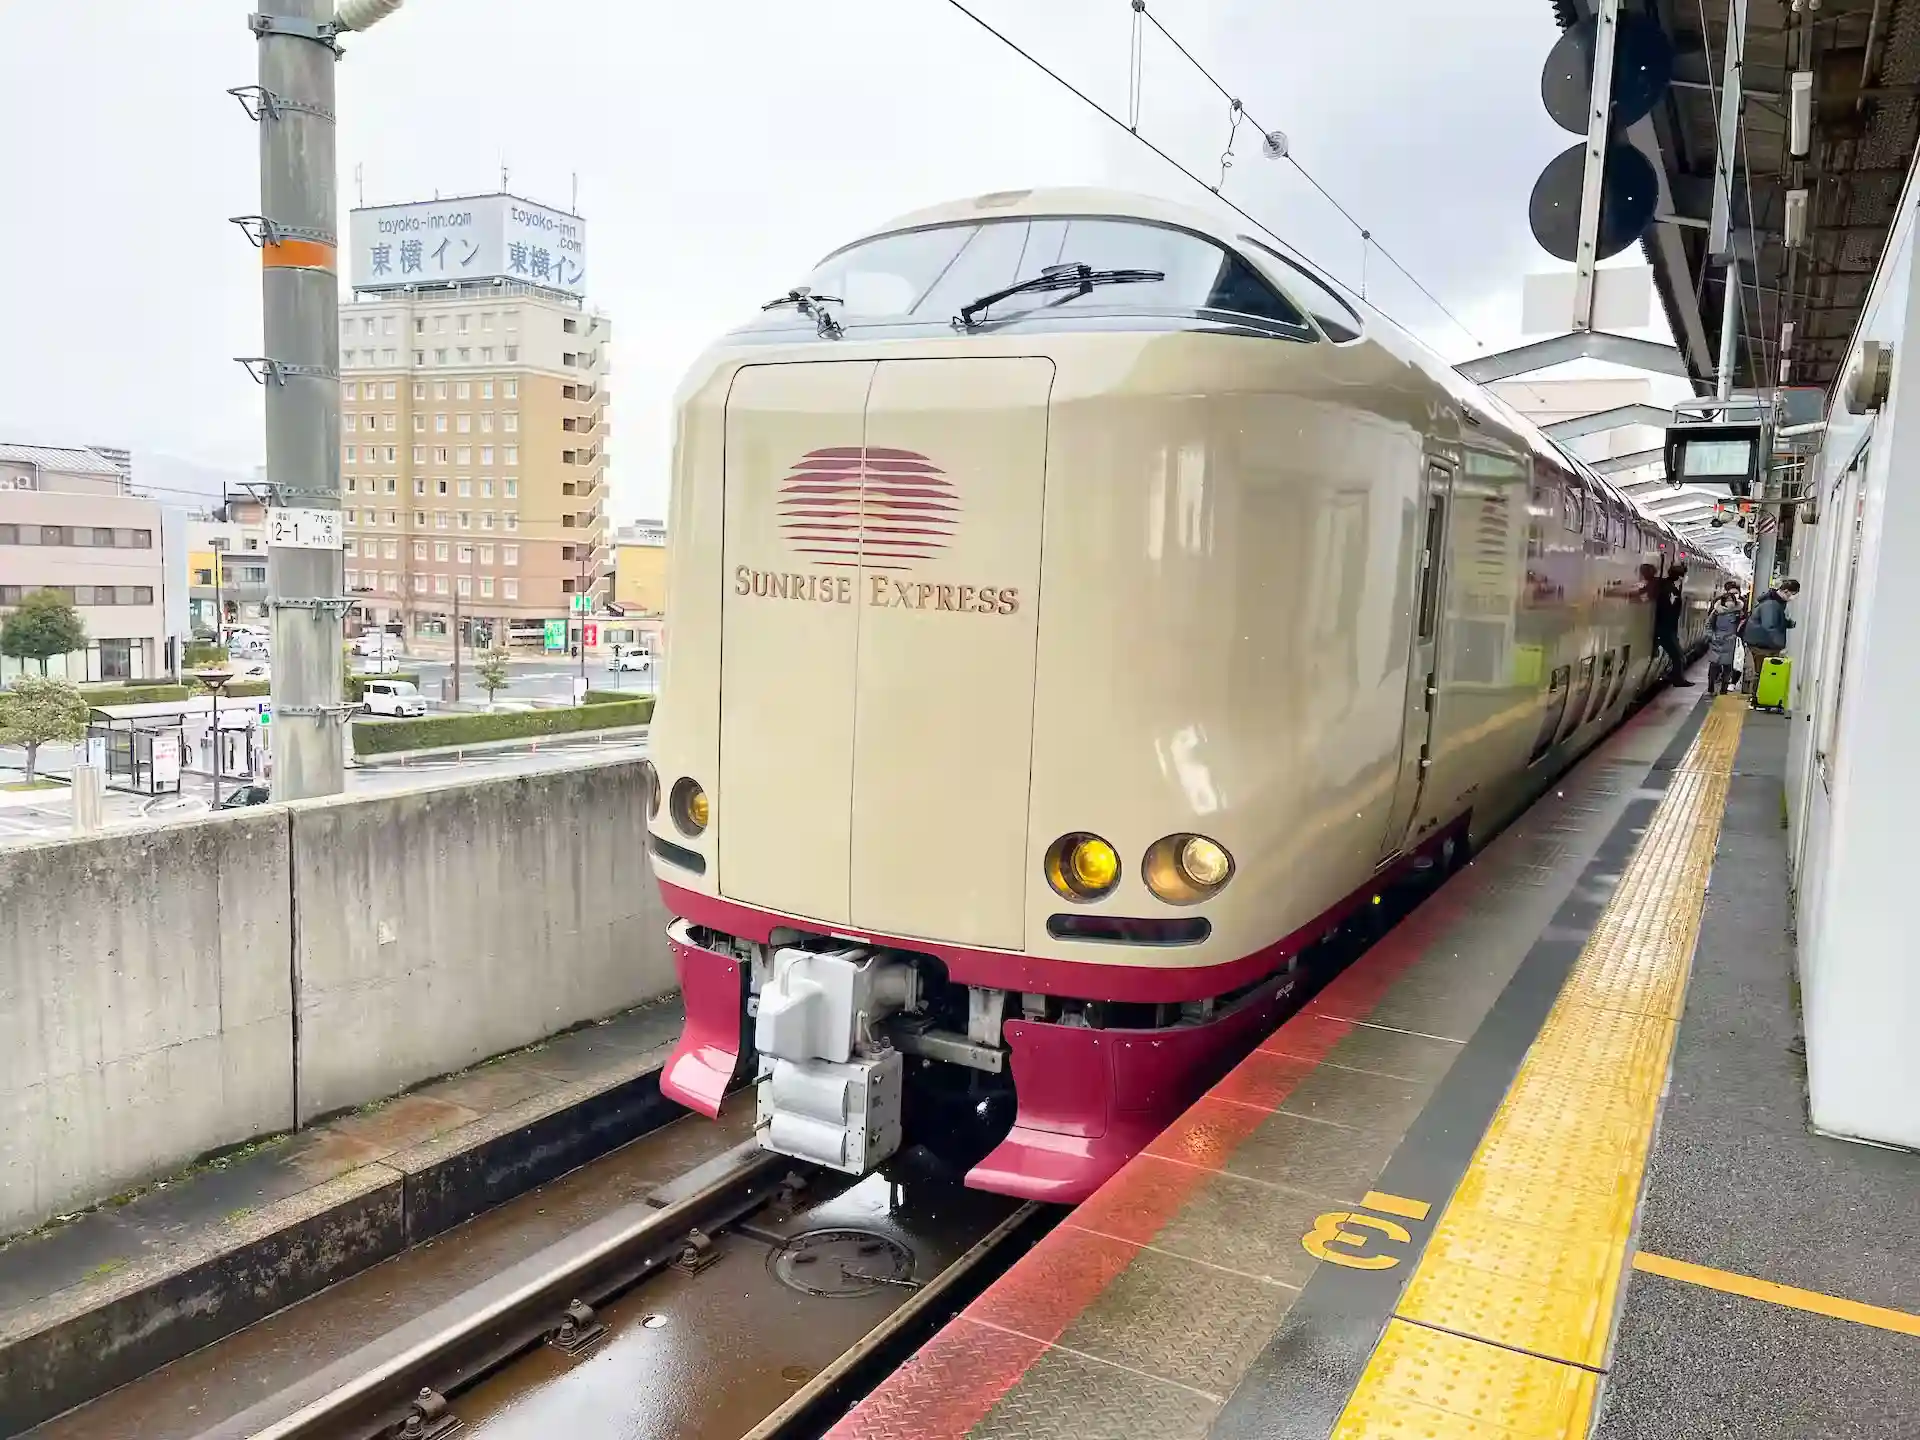 Sunrise Izumo sleeper express stopping at Izumo City Station in Shimane Prefecture.